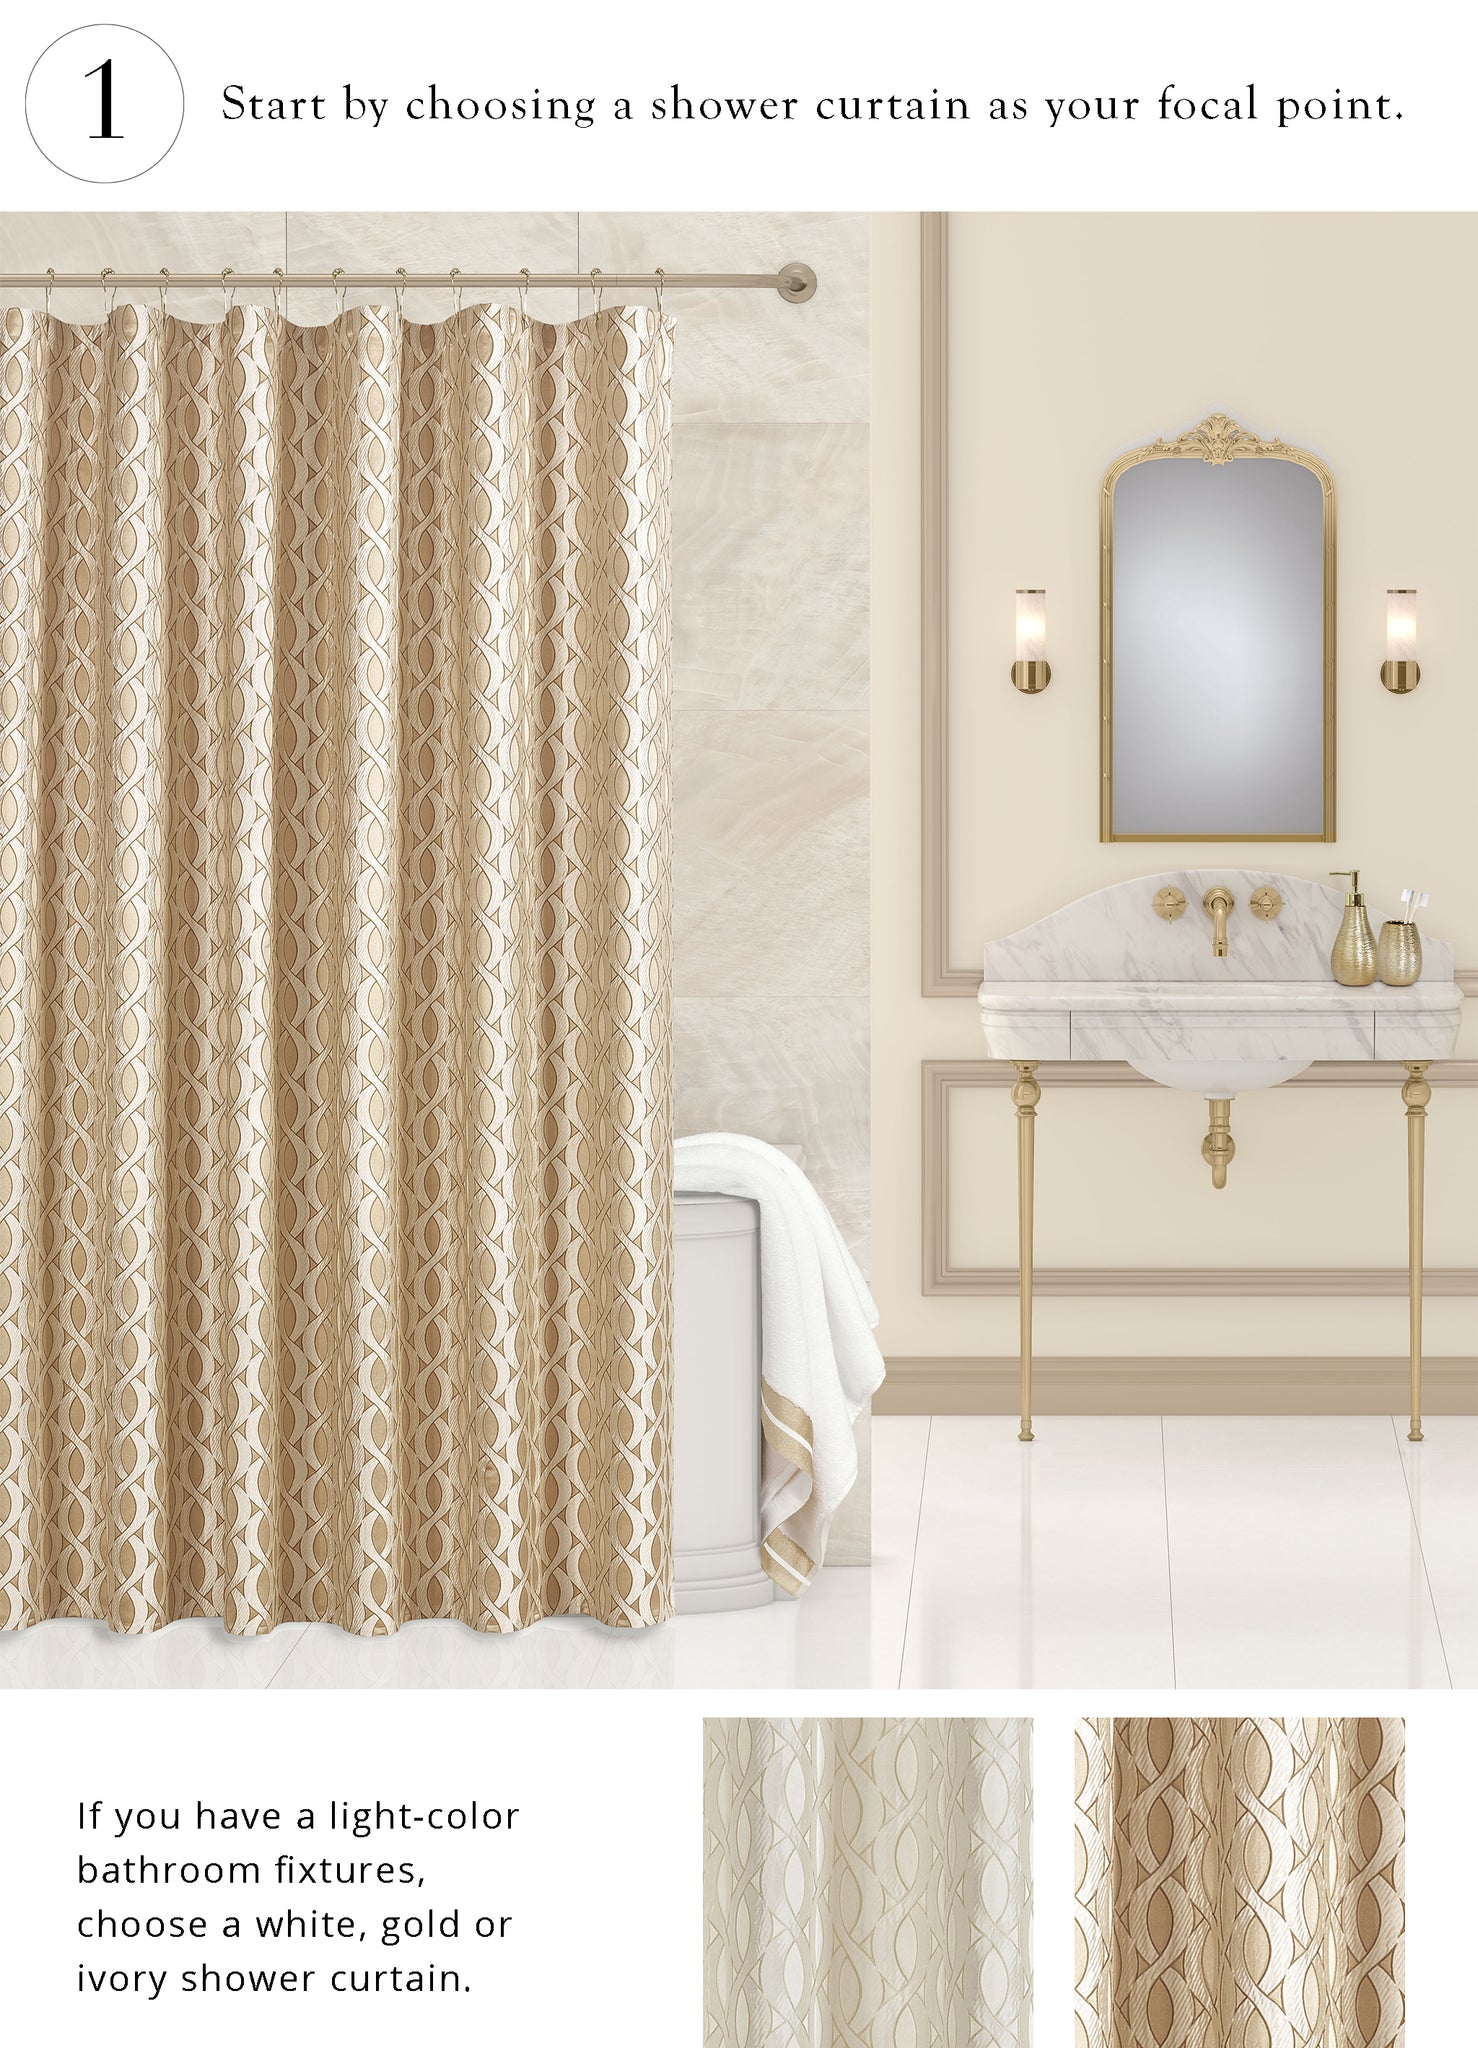 Luxury bathroom with jacquard shower curtain La boheme gold